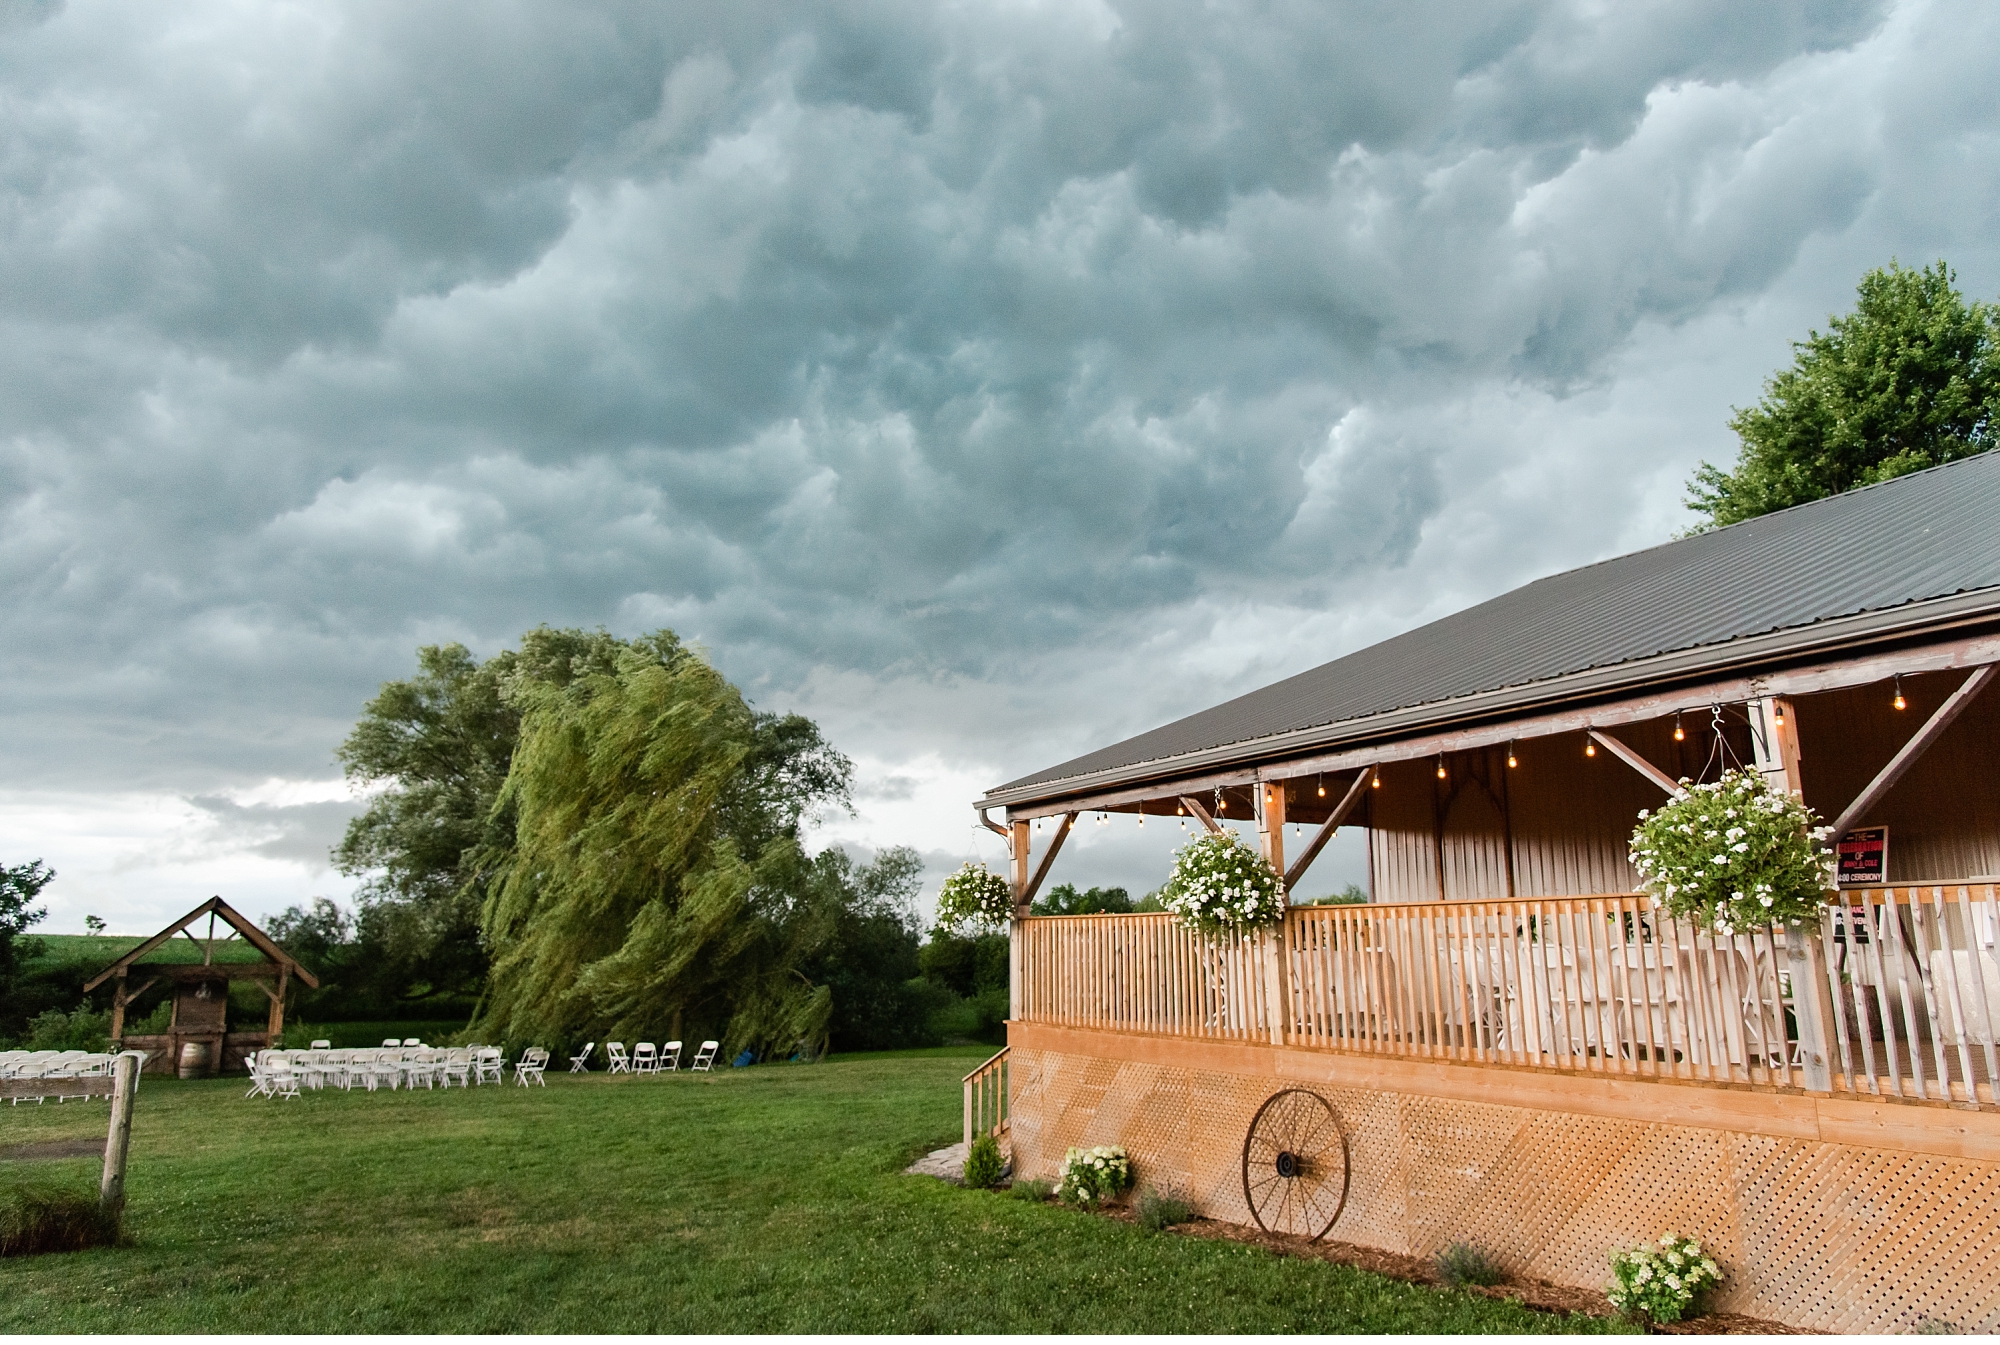 storm clouds form overtop of a wedding venue in kelowna british columbia